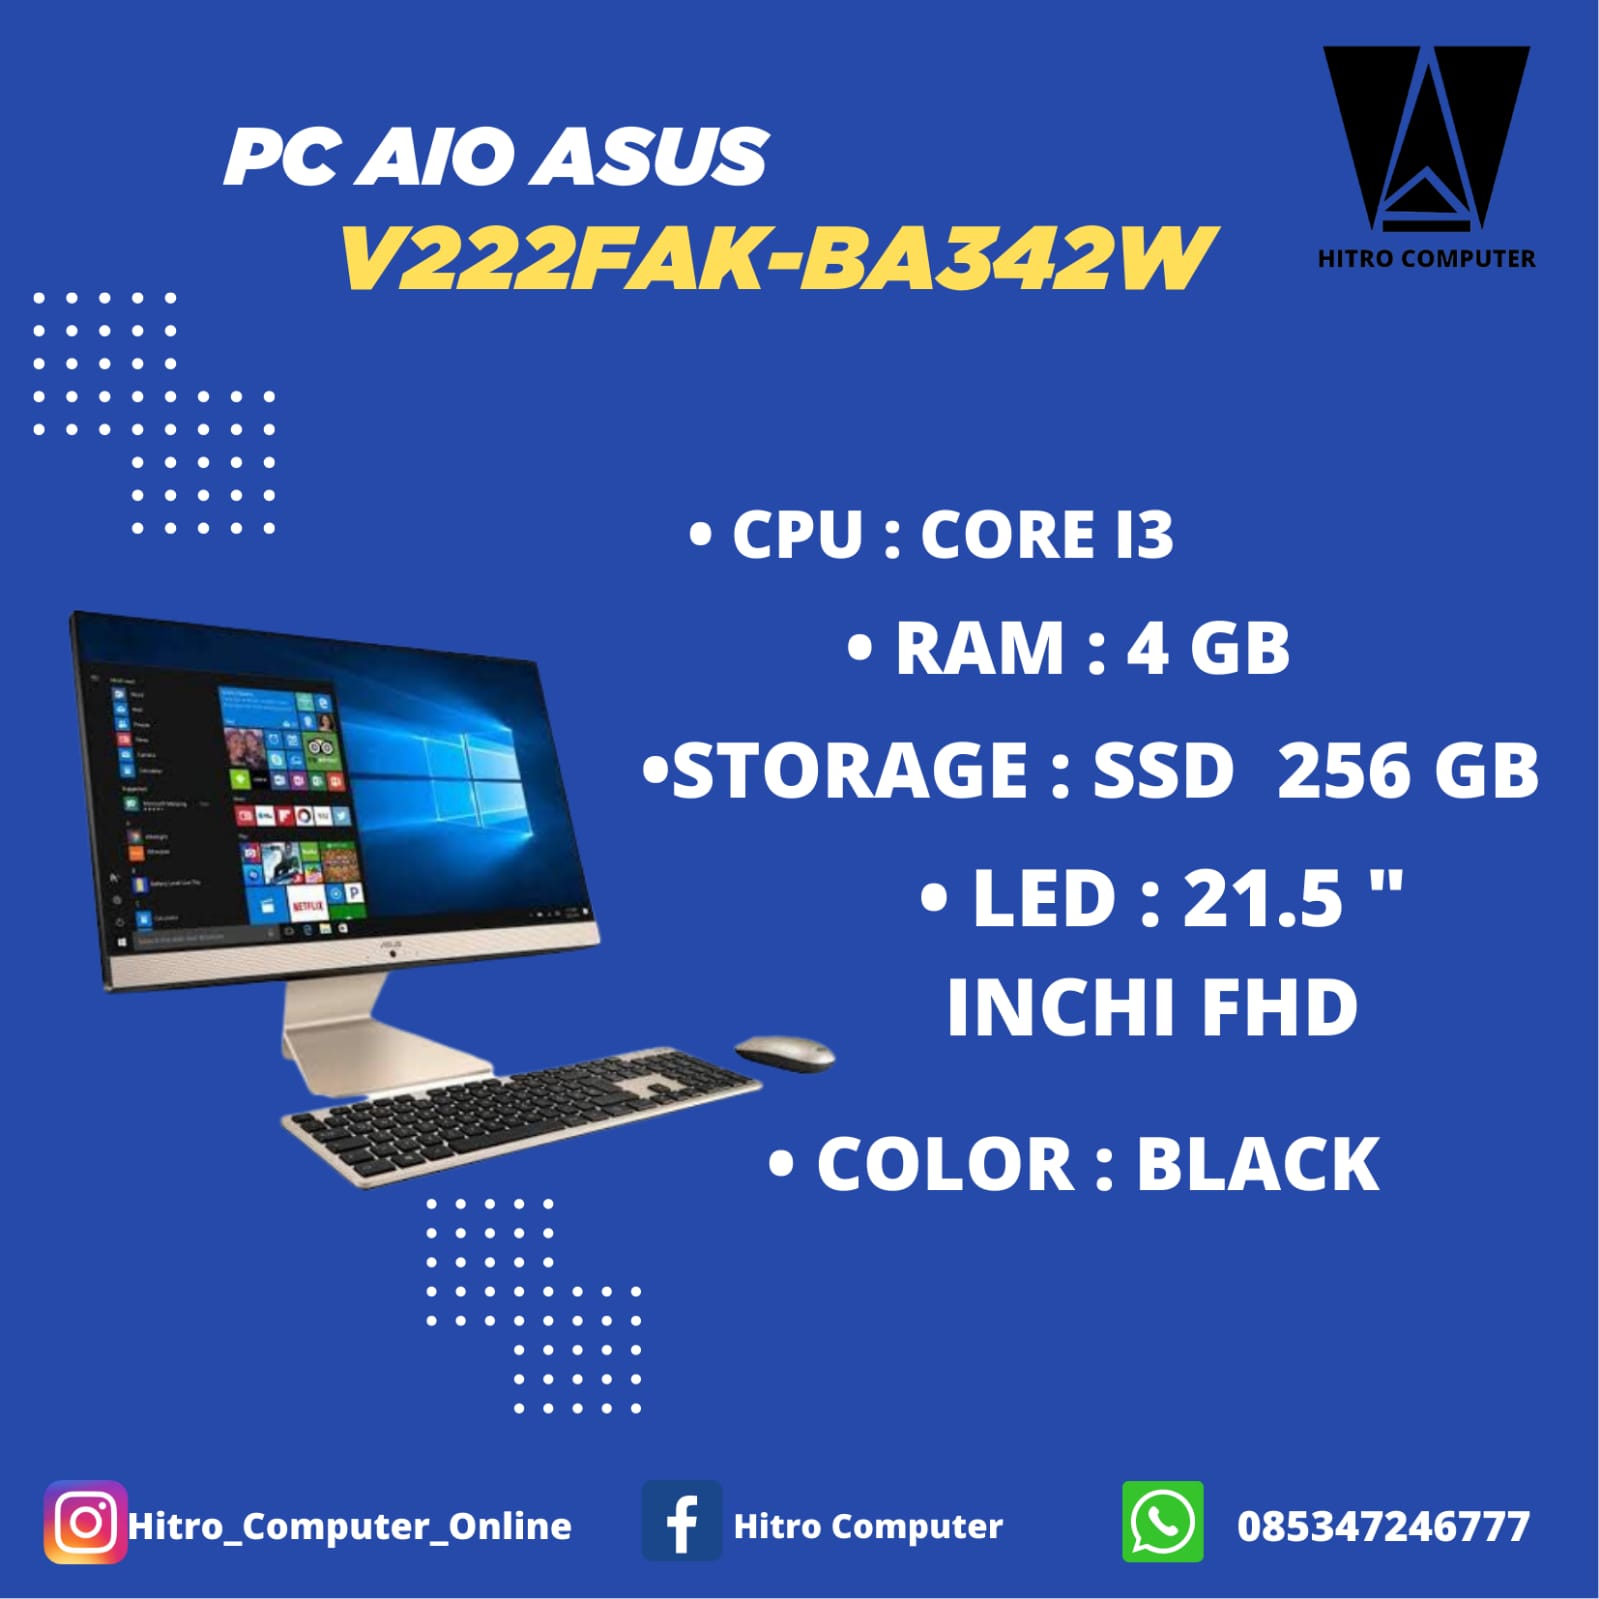 PC AIO ASUS V222FAK-BA342W